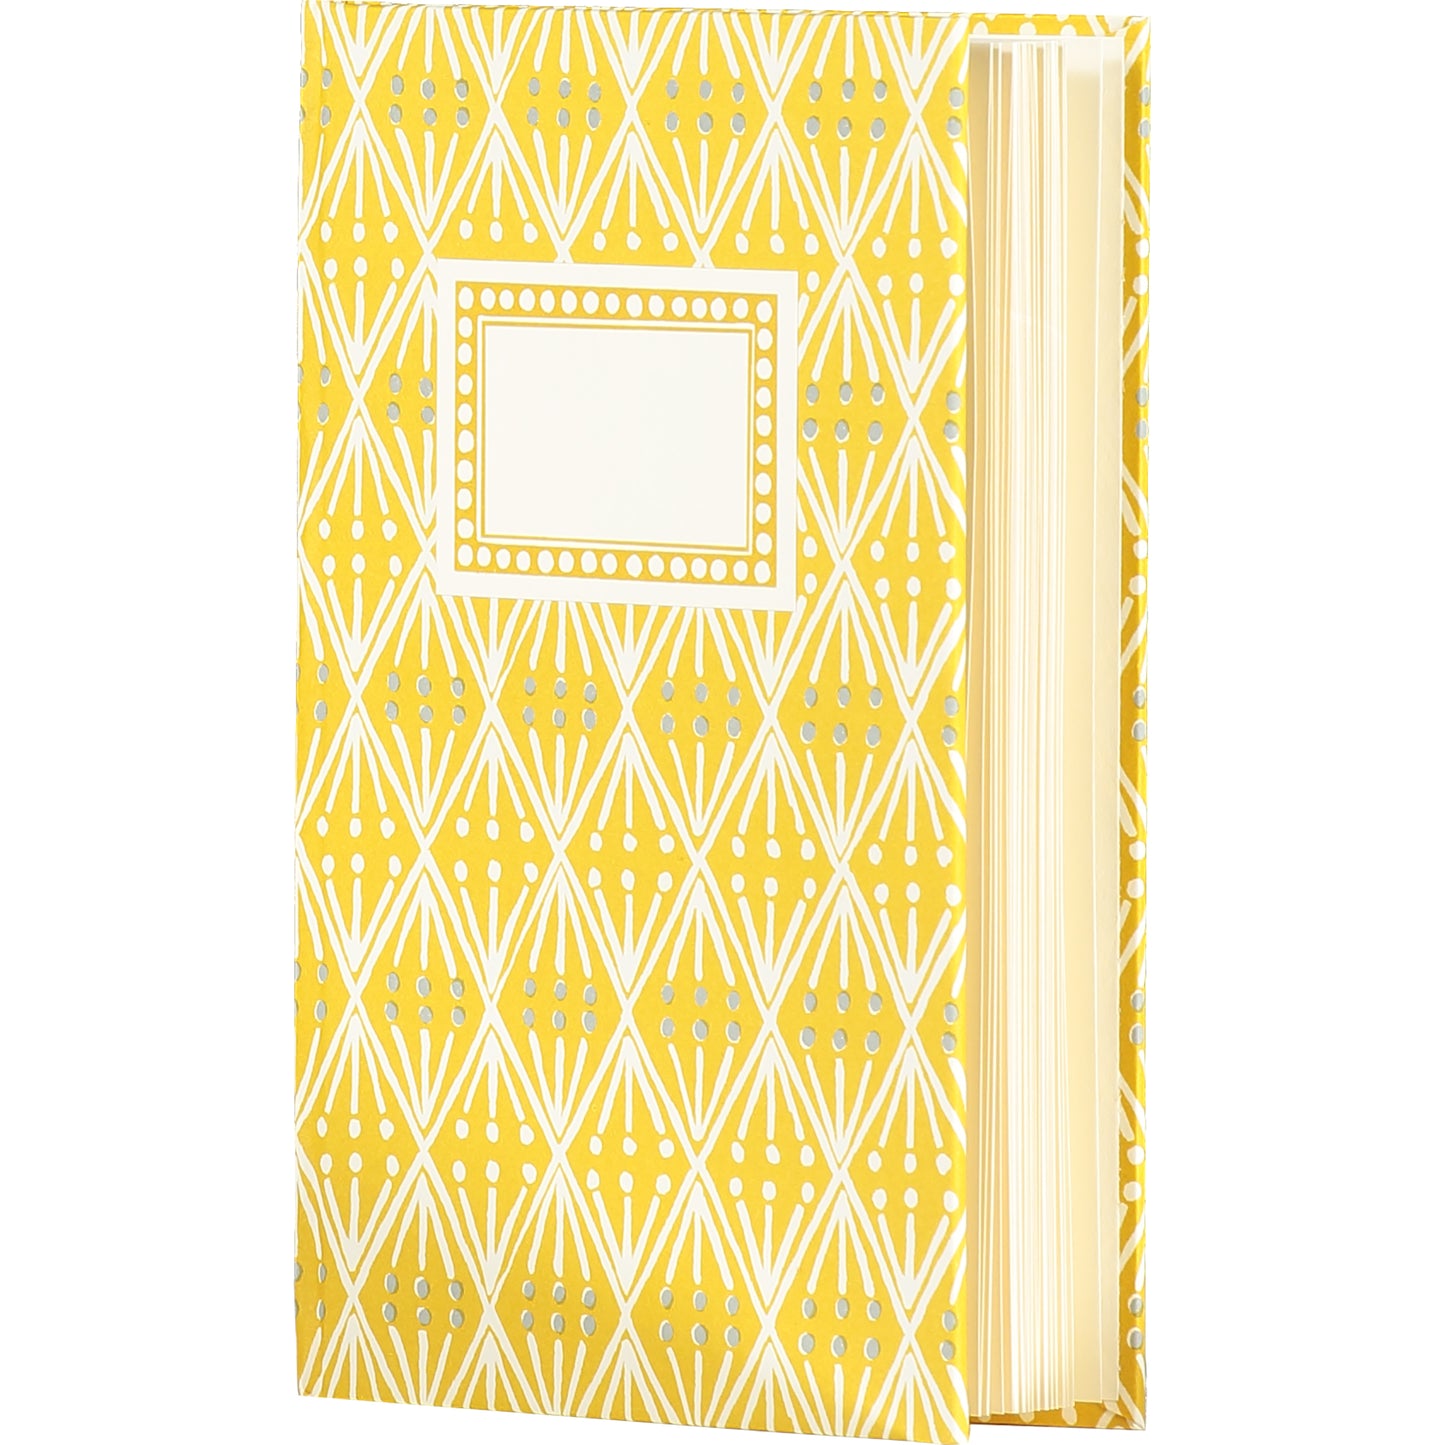 Selvedge &Cambridge Imprint, Notebook (Available in three colourways)